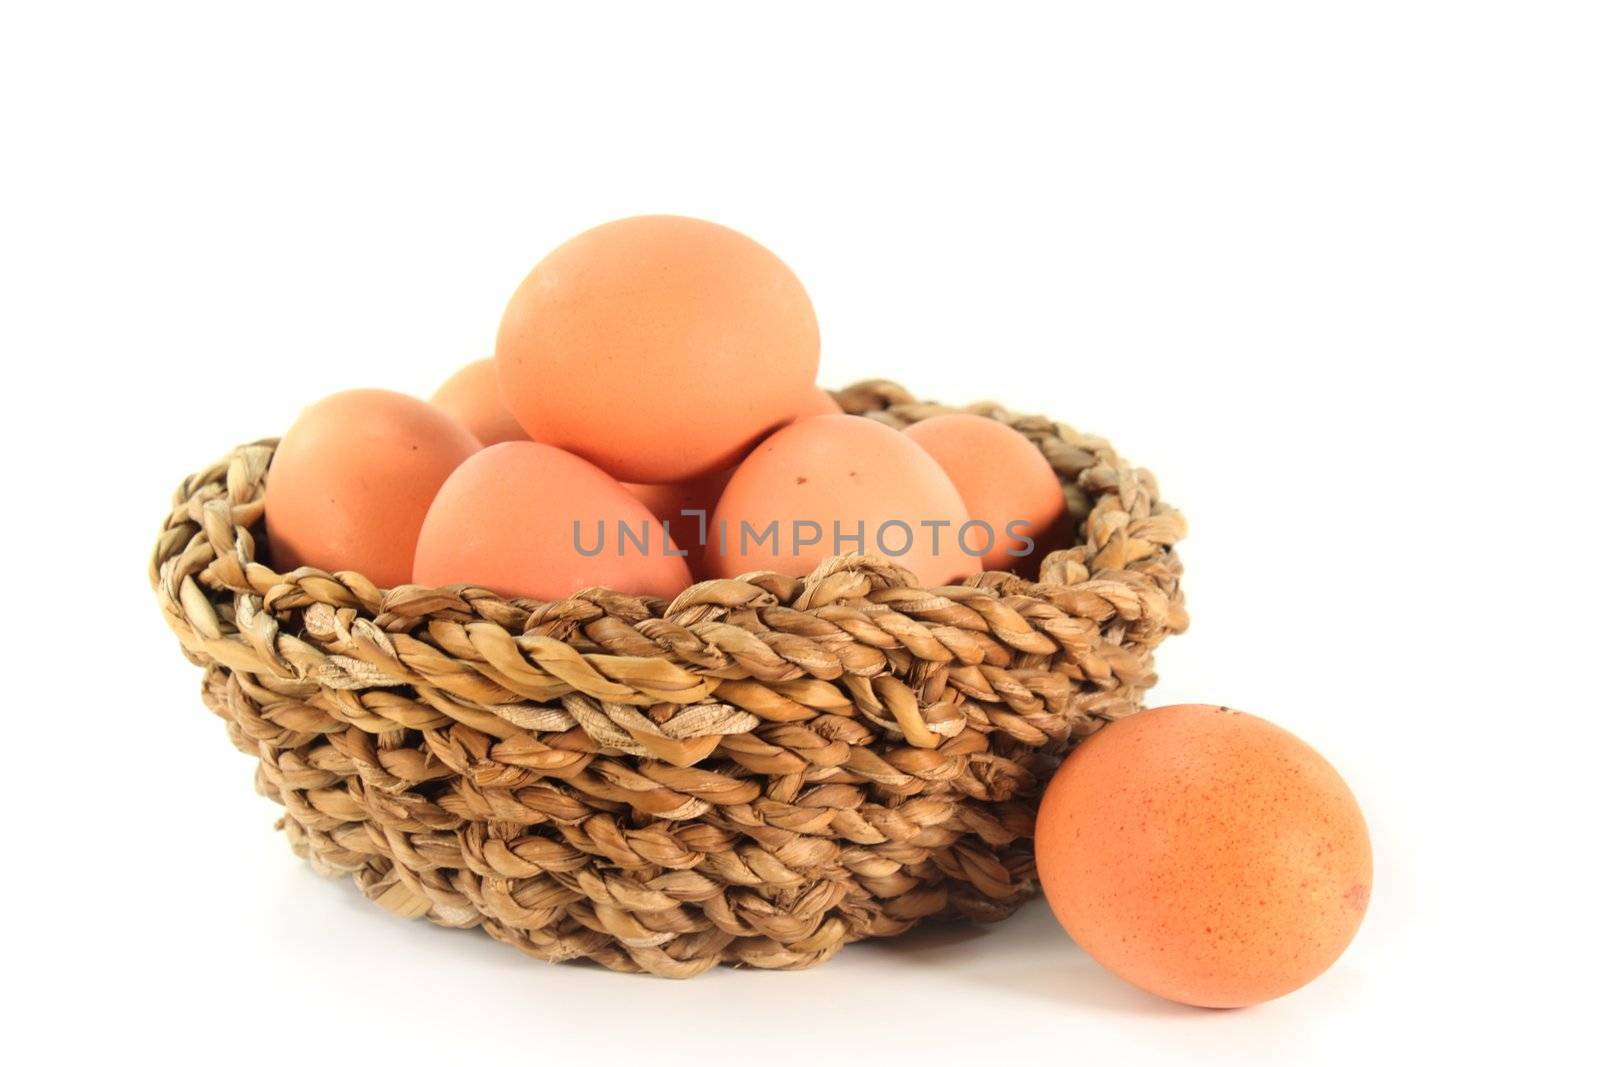 Eggs by silencefoto